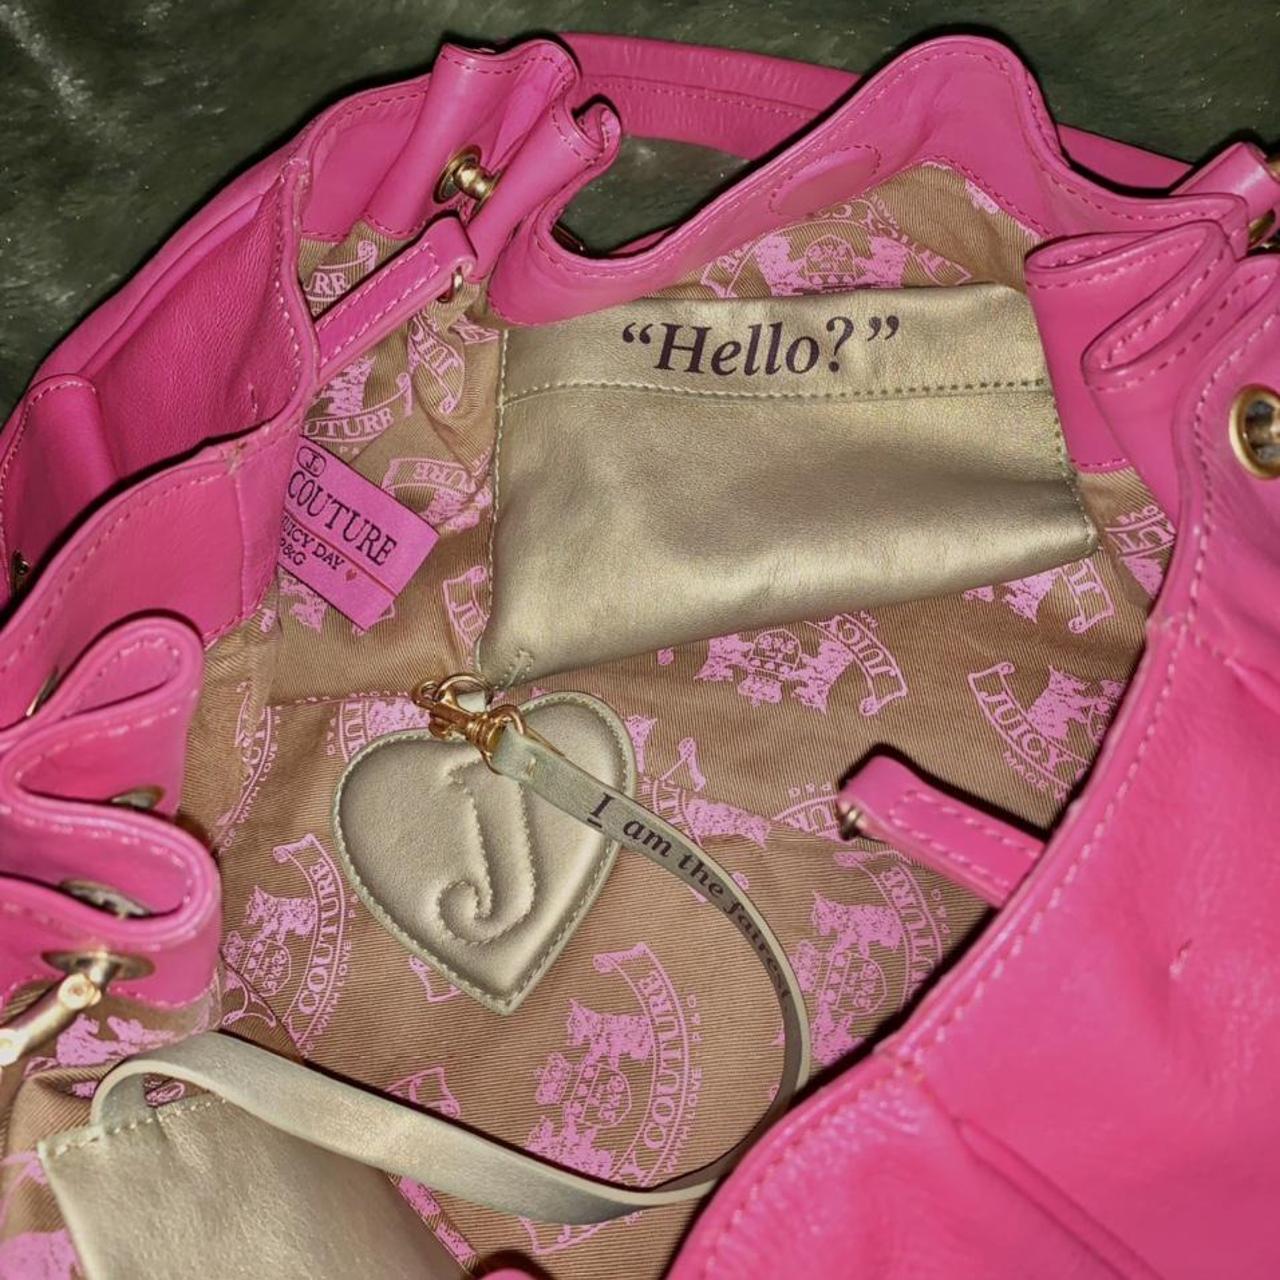 HOT PINK DEREON BAG ✨ hot pink or fuchsia dereon bag - Depop